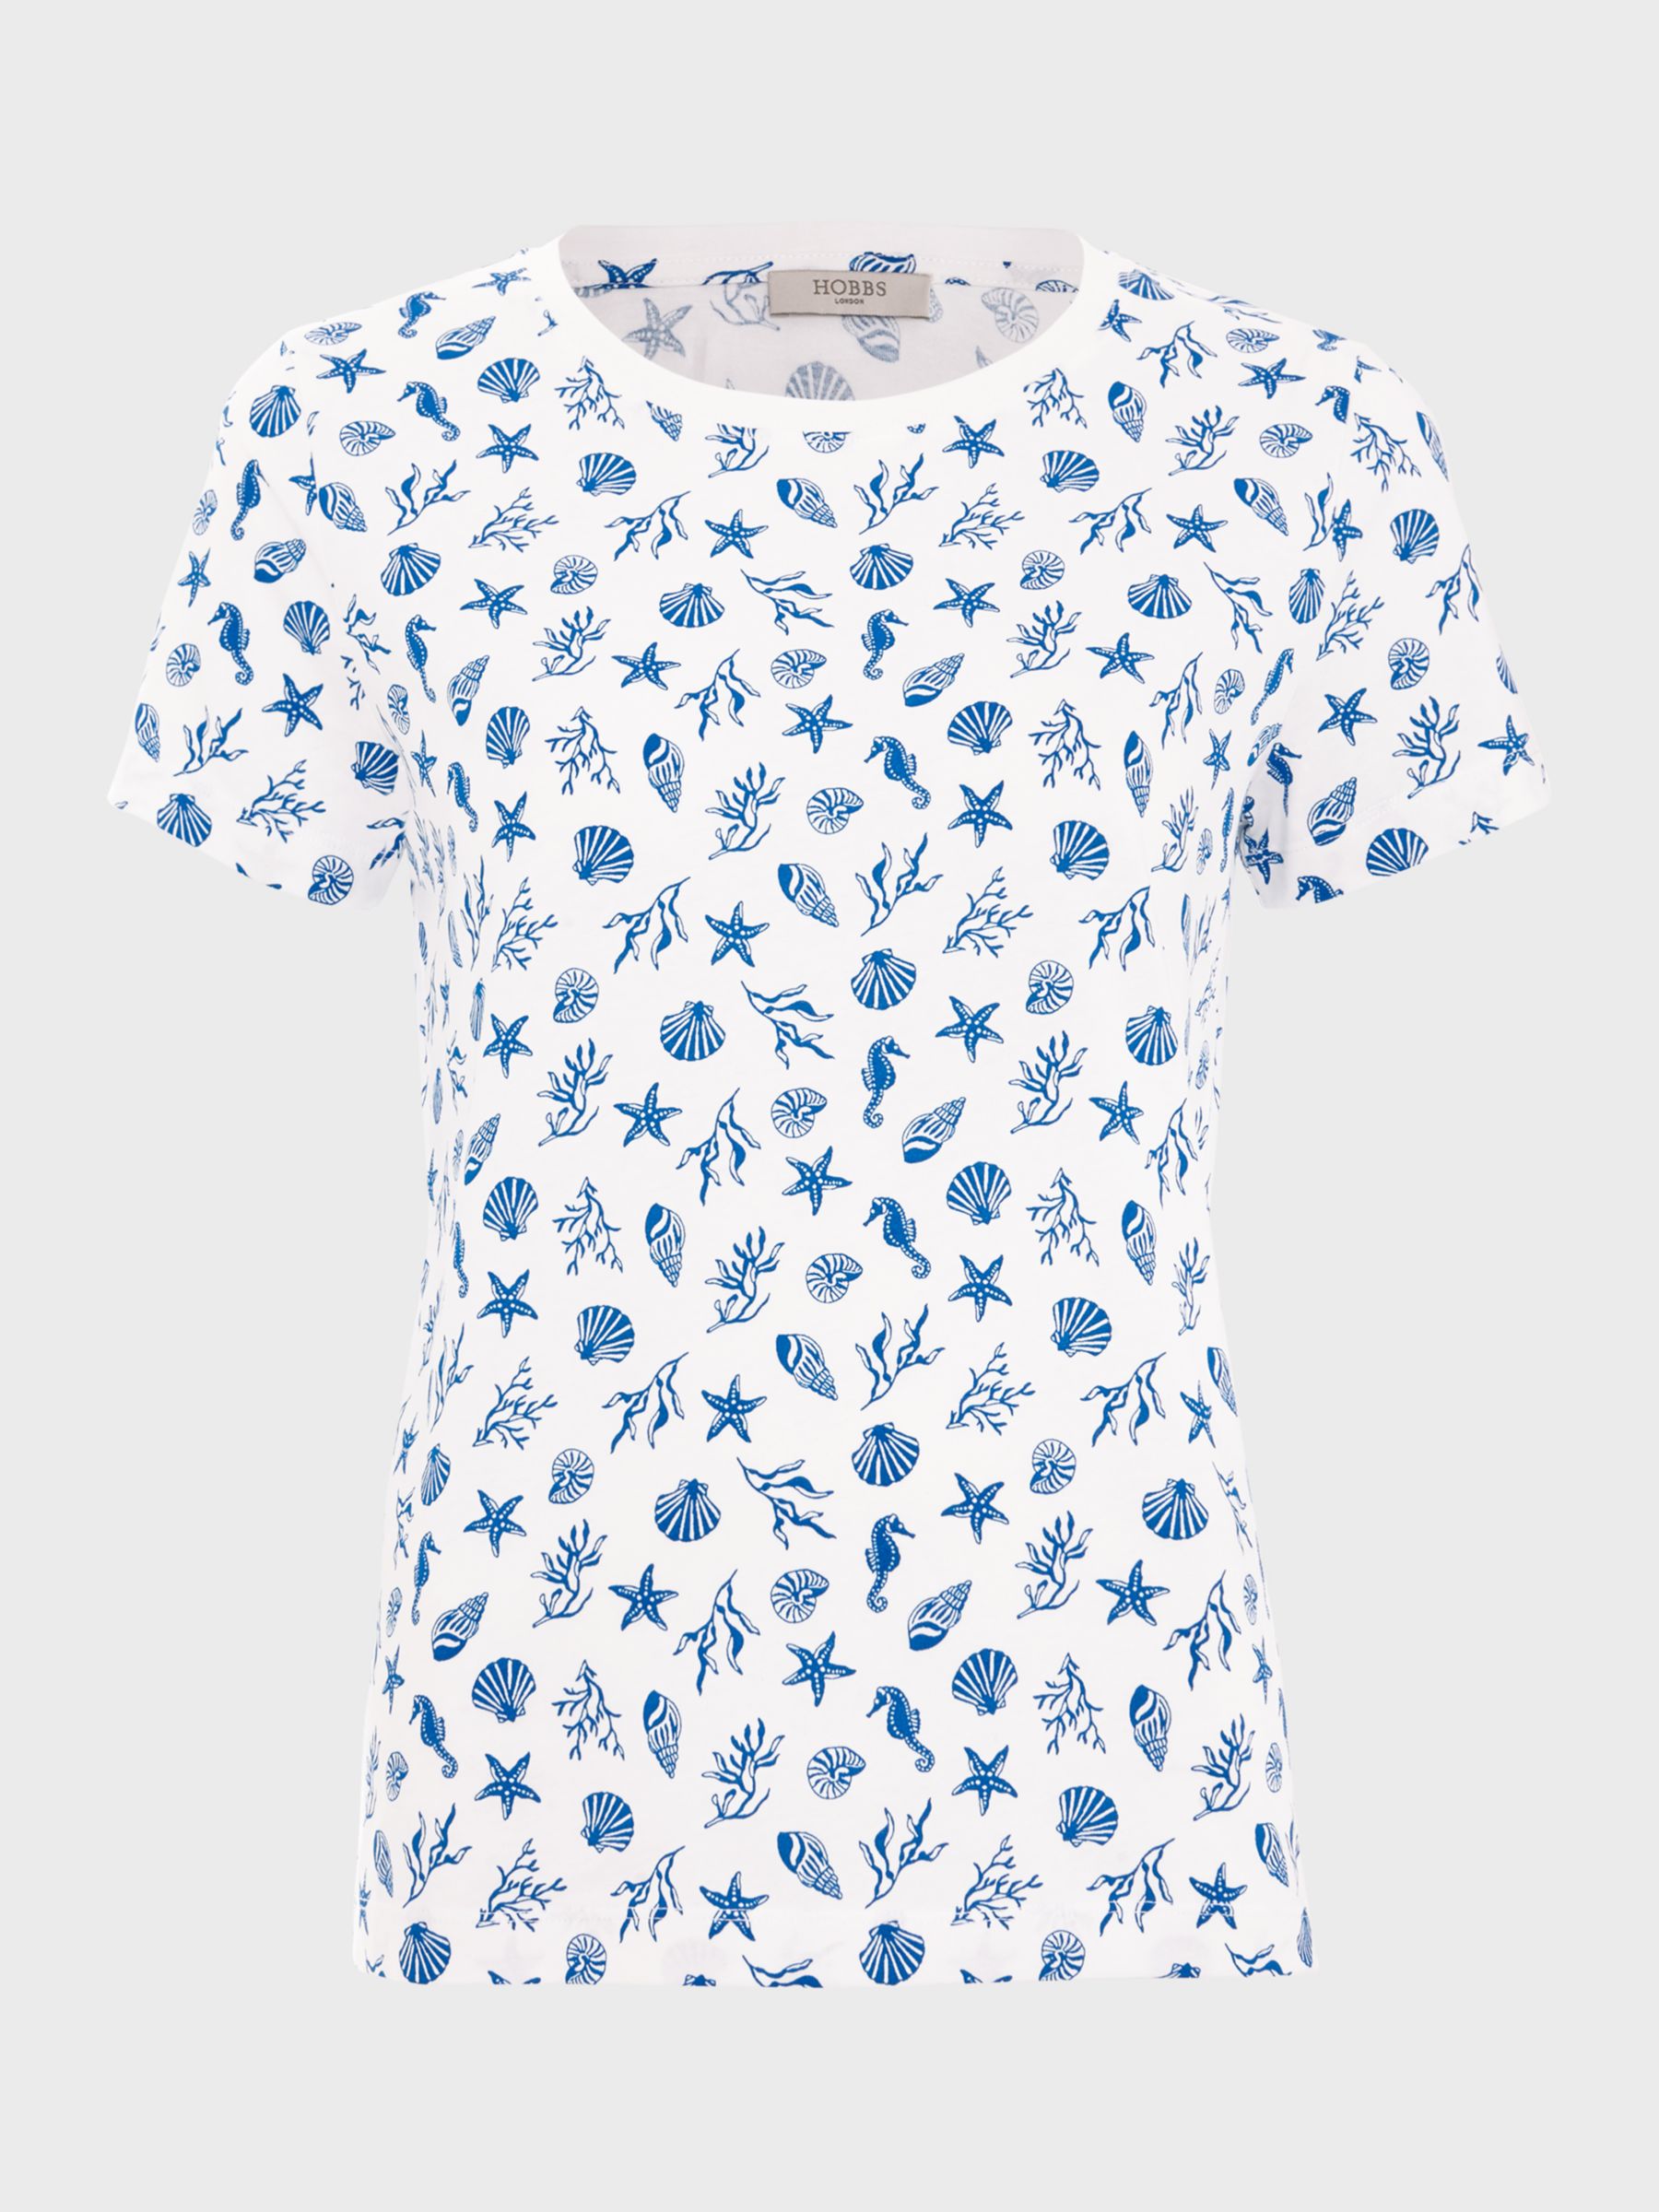 Hobbs Pixie Seashell Print T-Shirt, Ivory/Blue, M